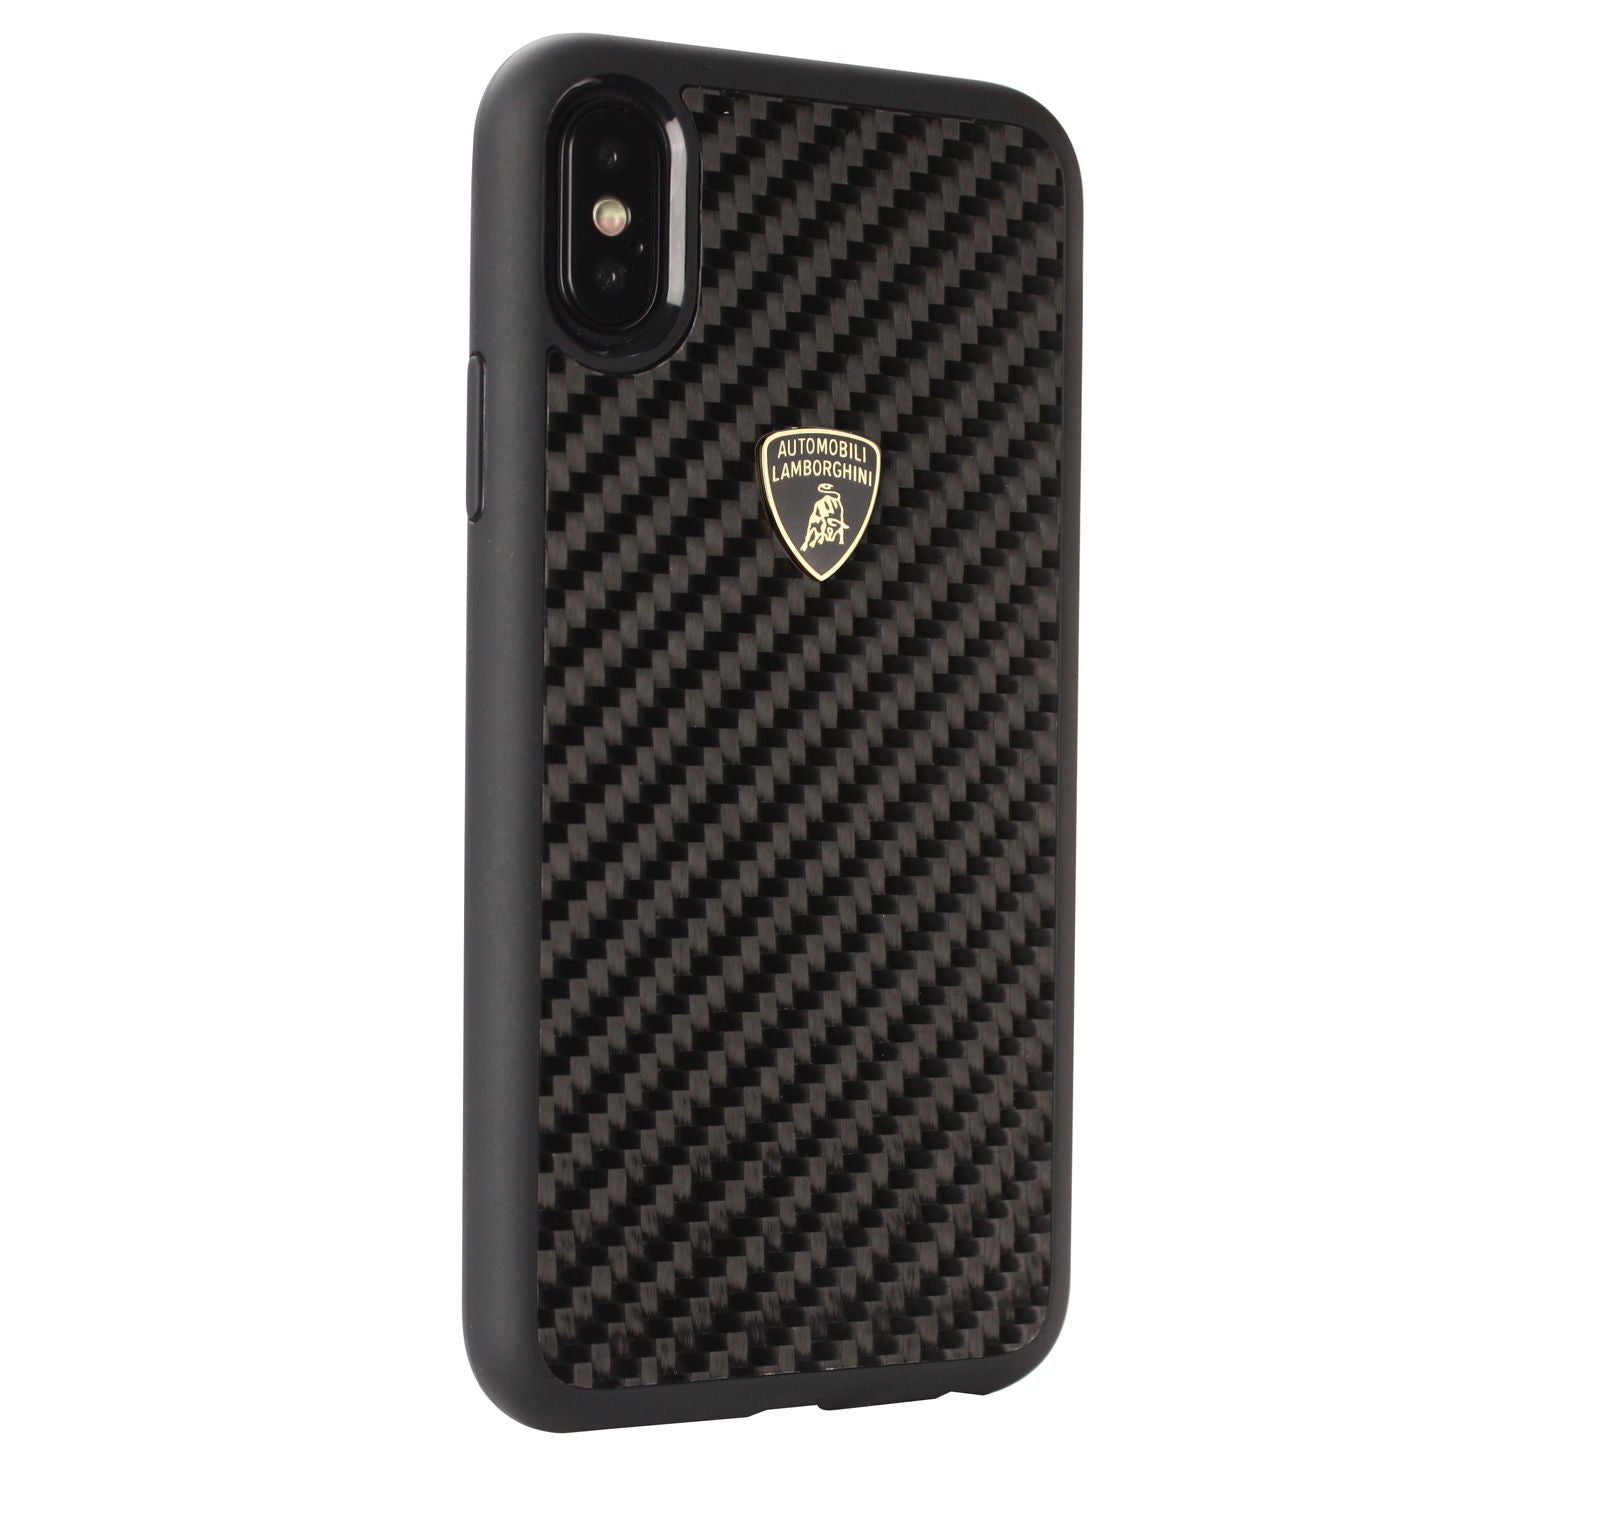 Luxury Genuine Leather & Carbon Fiber Hybrid Official Lamborghini Elemento D3 Series Anti Knock Back Case Cover for Apple iPhone X / XS 2018 - BLACK